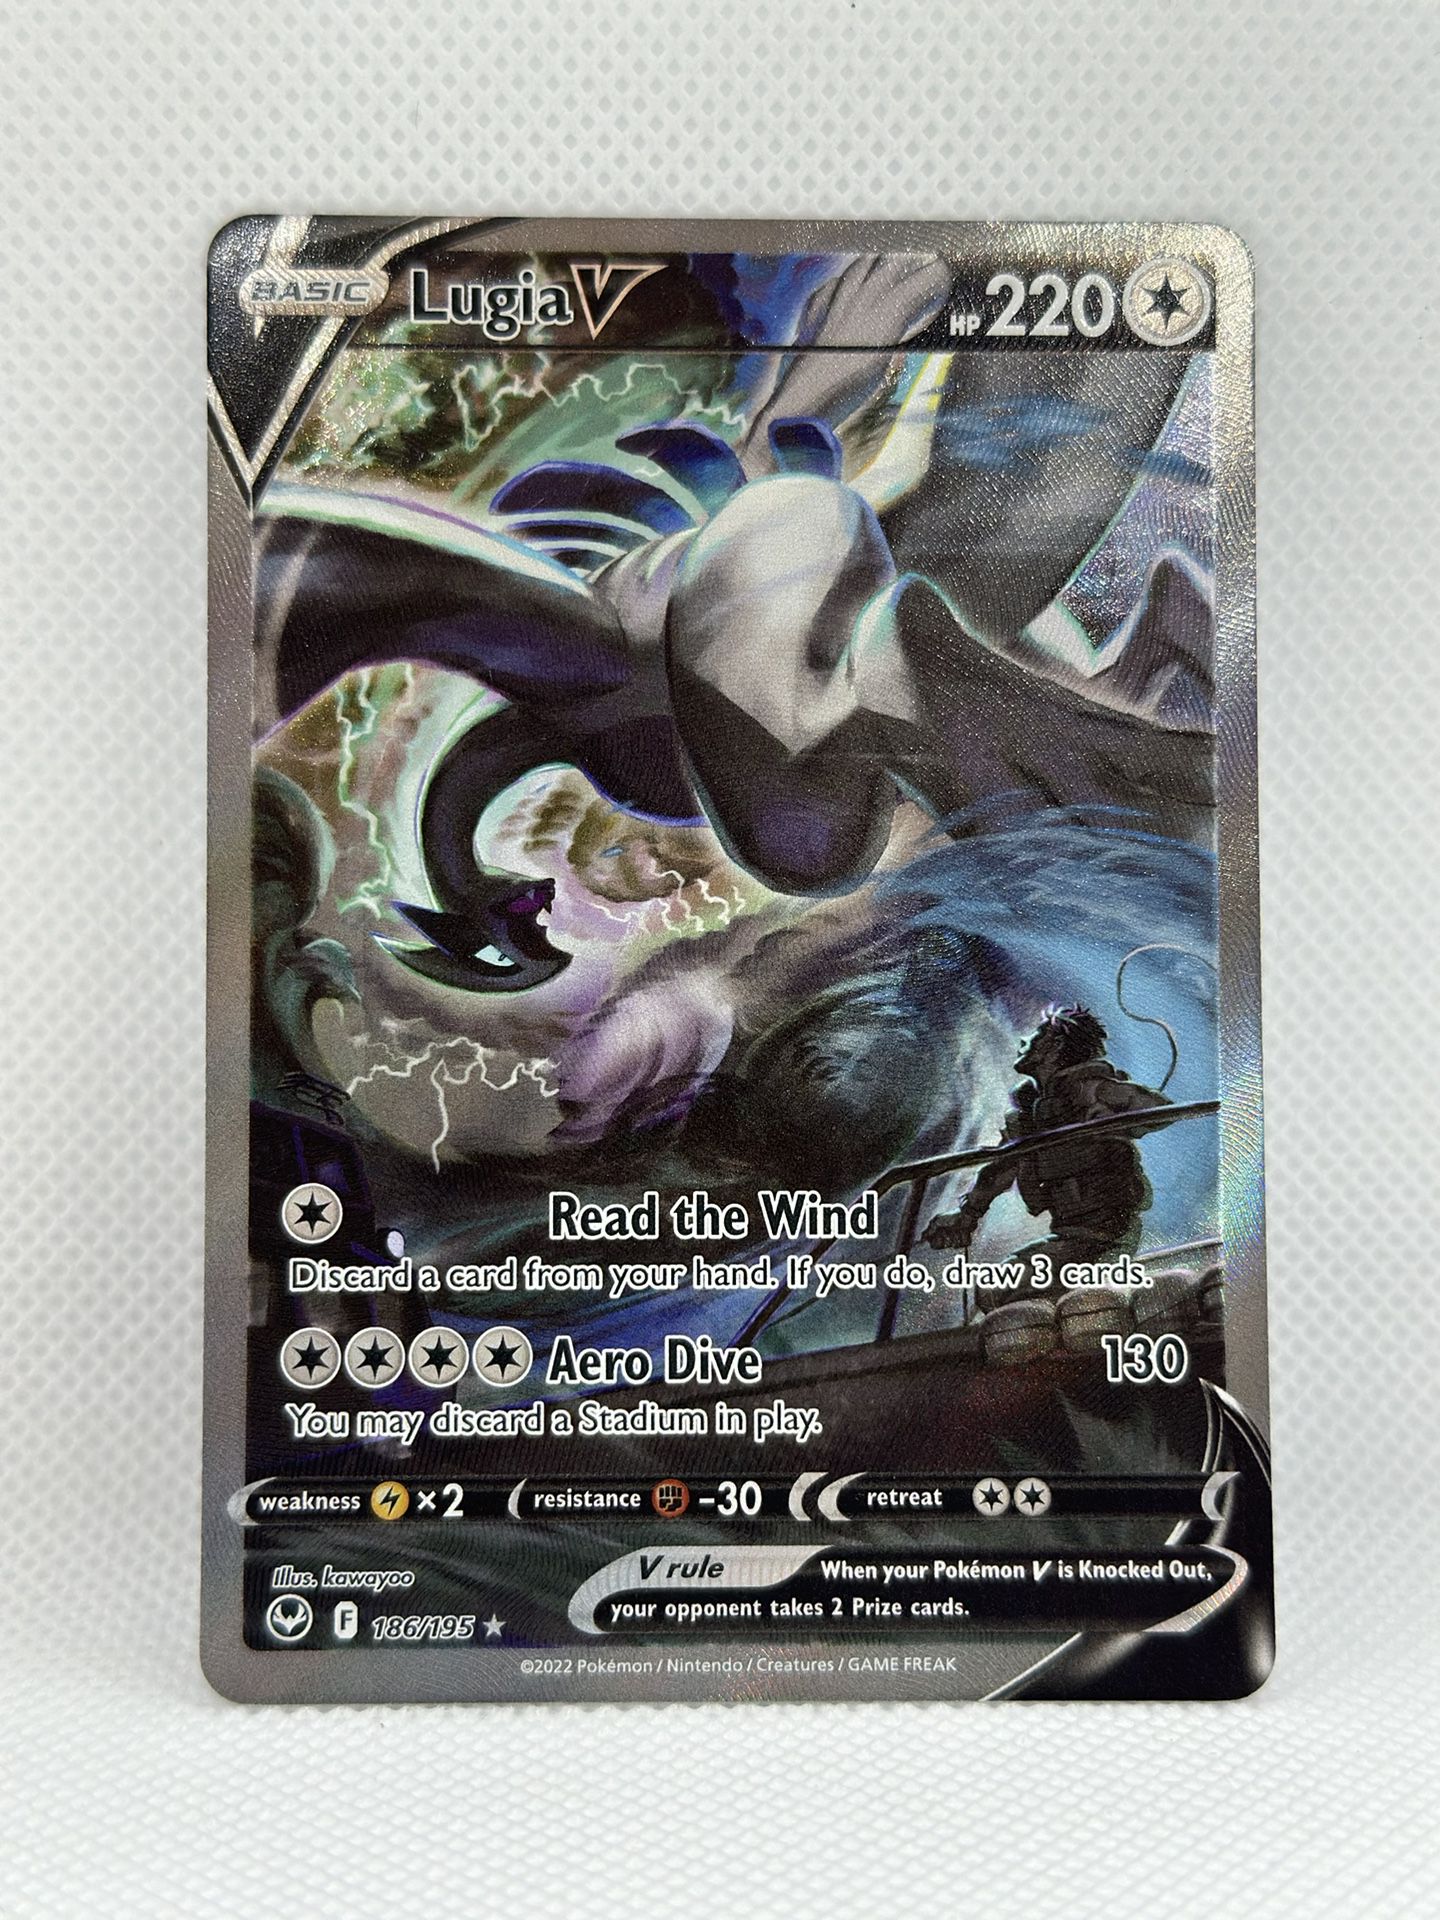 Pokémon TCG Silver Tempest Lugia V alt art 186/195 Mint Pack To Sleeve 